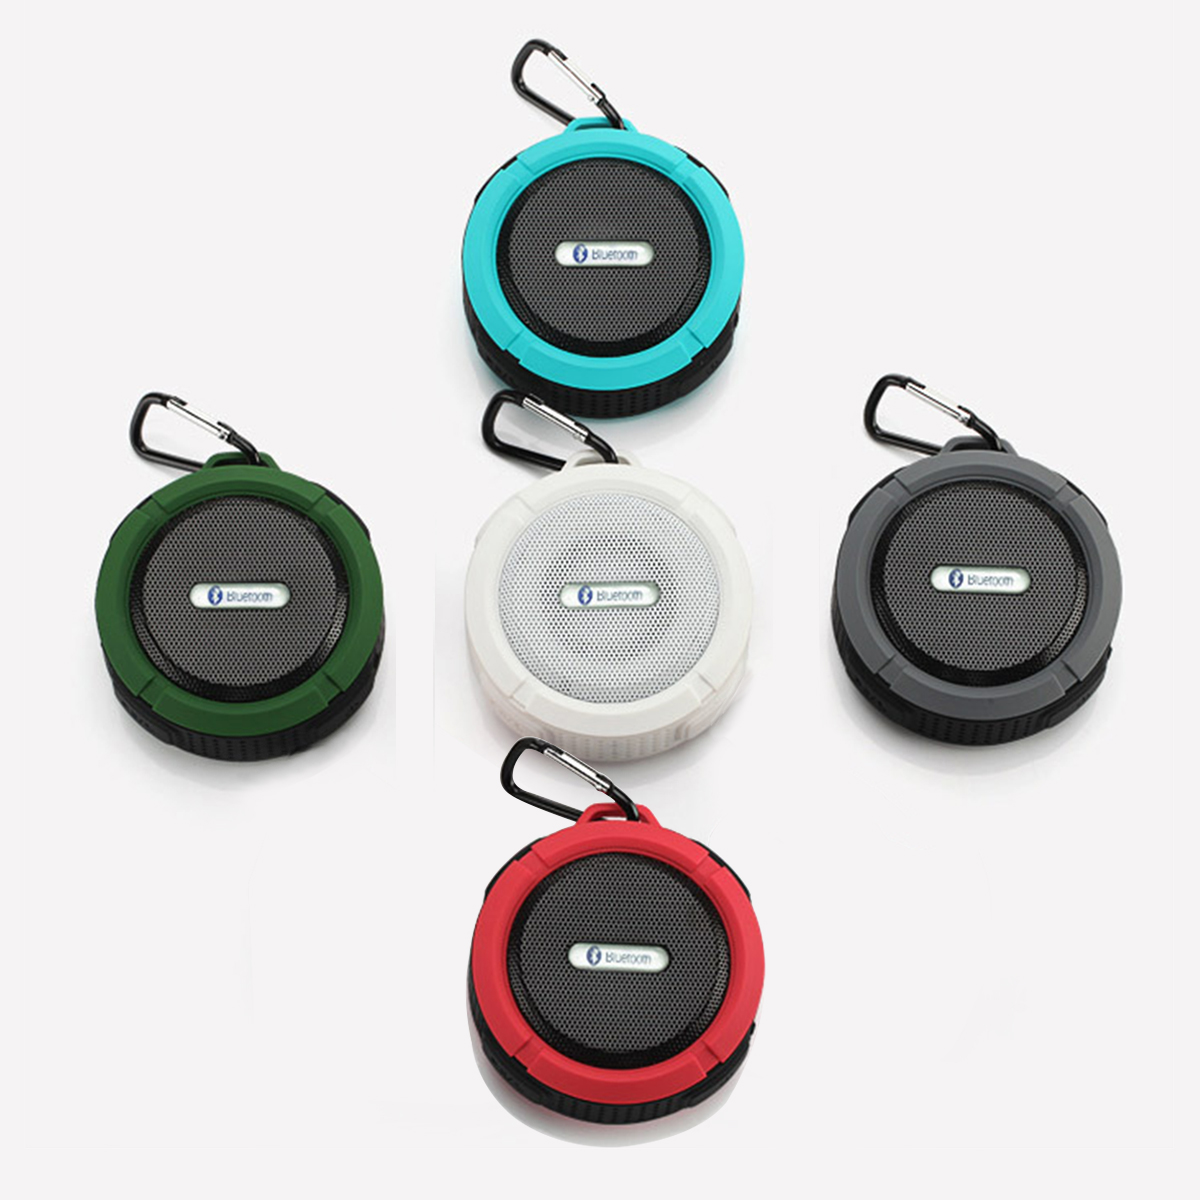 C6 Bluetooth Speaker Outdoor Waterproof Sound Box Wireless Sound Box Support Insert TF-card - image 2 of 11